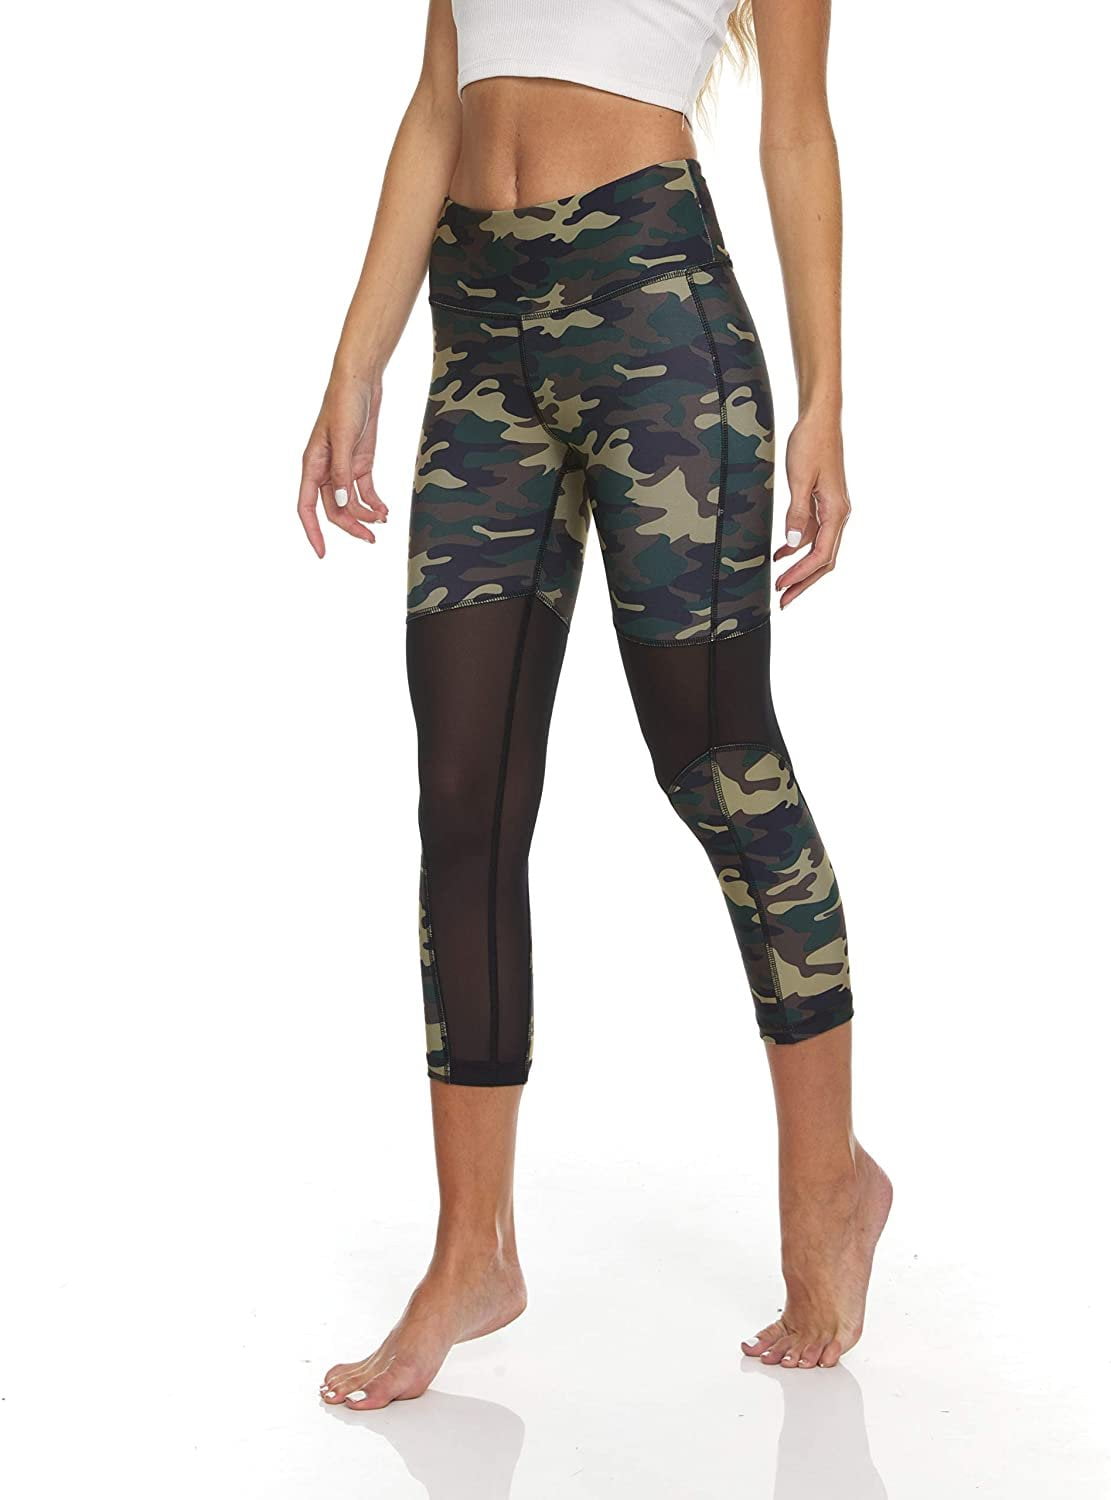 Kira Grace Warrior Tough Cut Black Yoga Pant Size S Athleisure #WFH | eBay